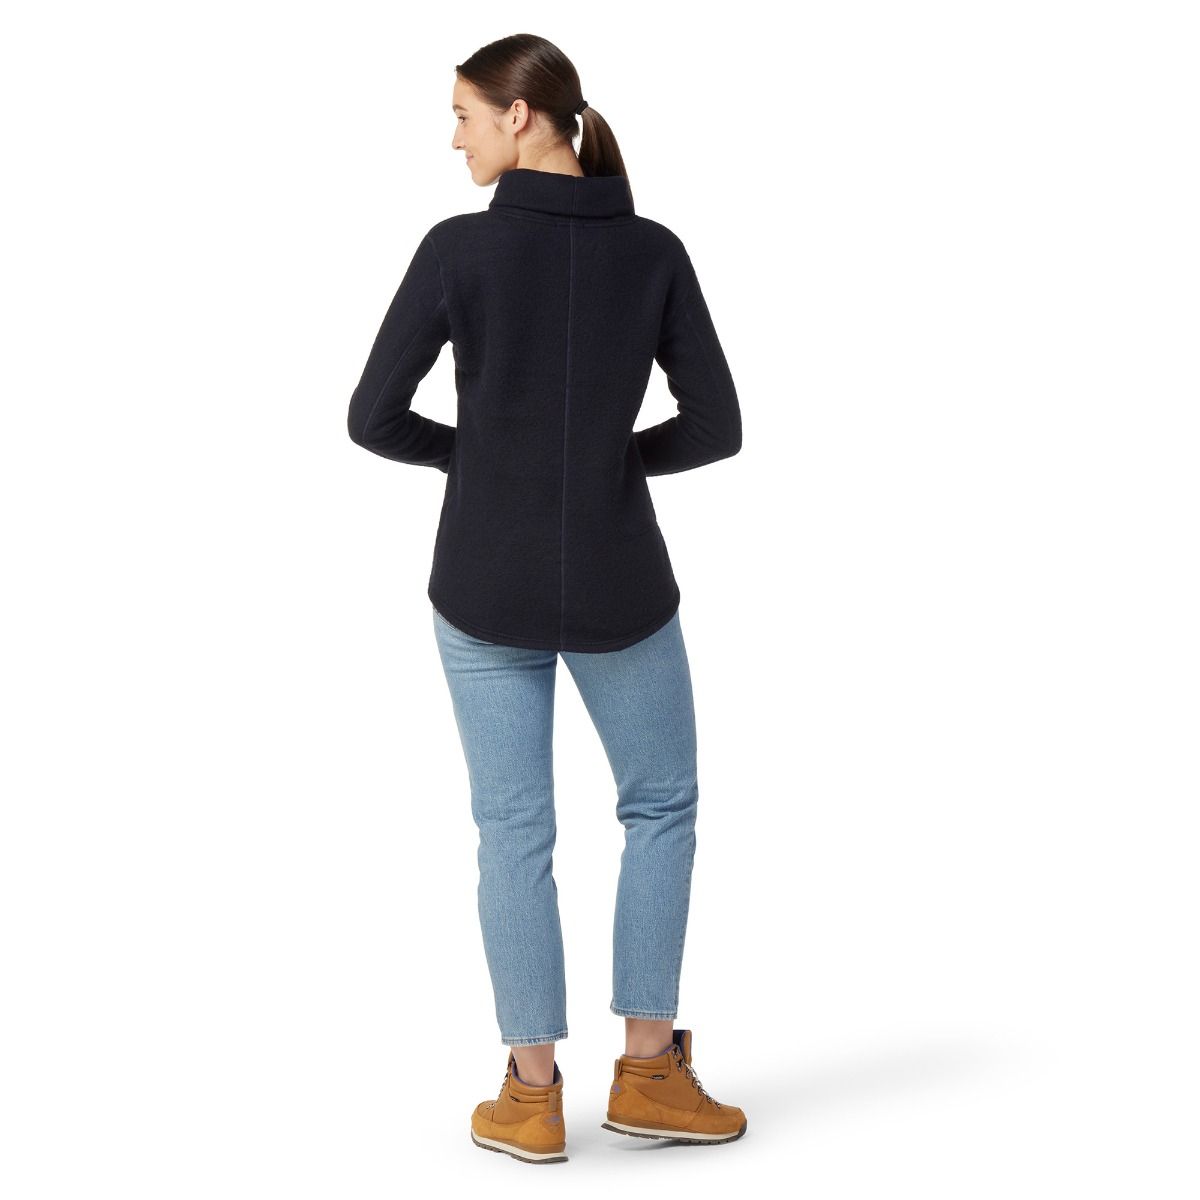 Smartwool Women's Hudson Trail Fleece Full Zip - Black